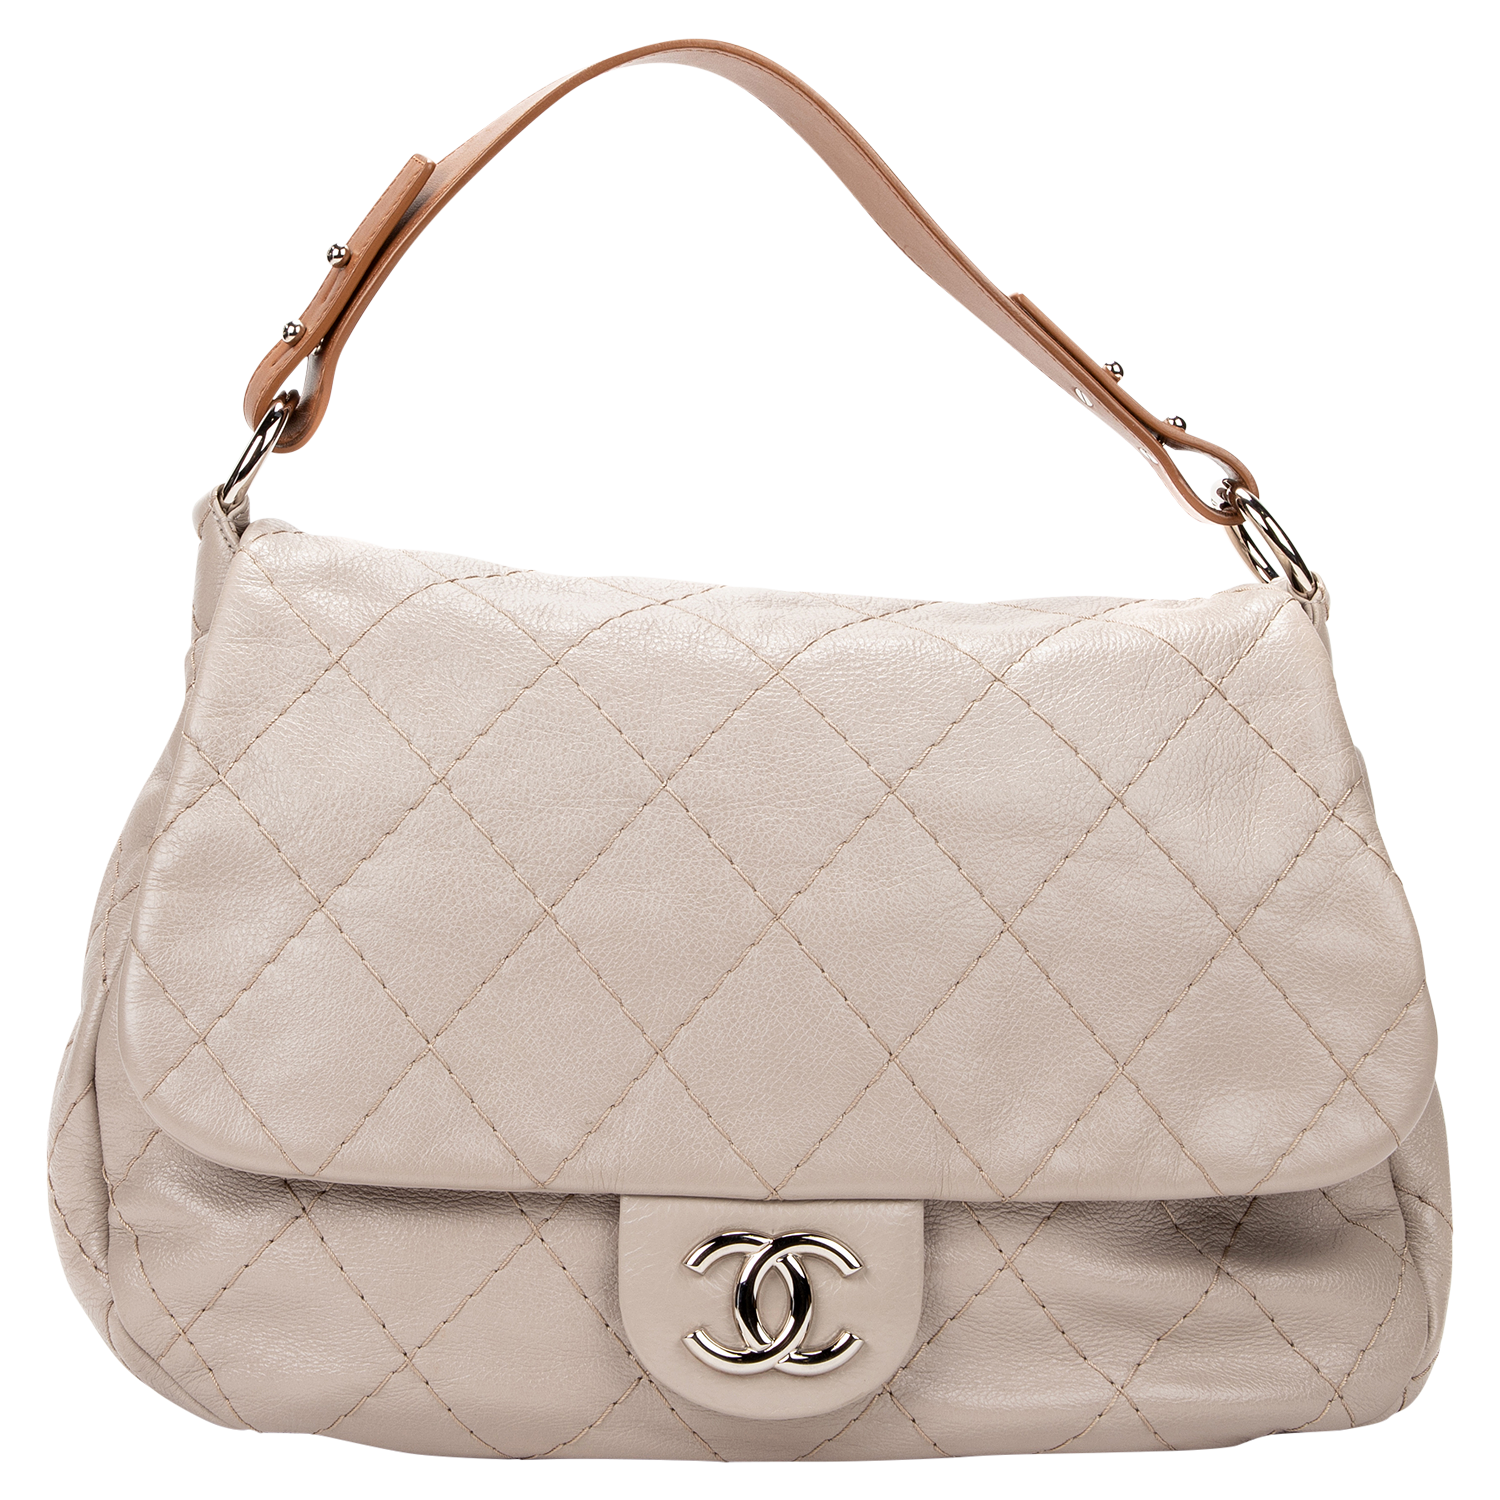 Chanel 2011 Grey Stitched Large Single Flap Bag